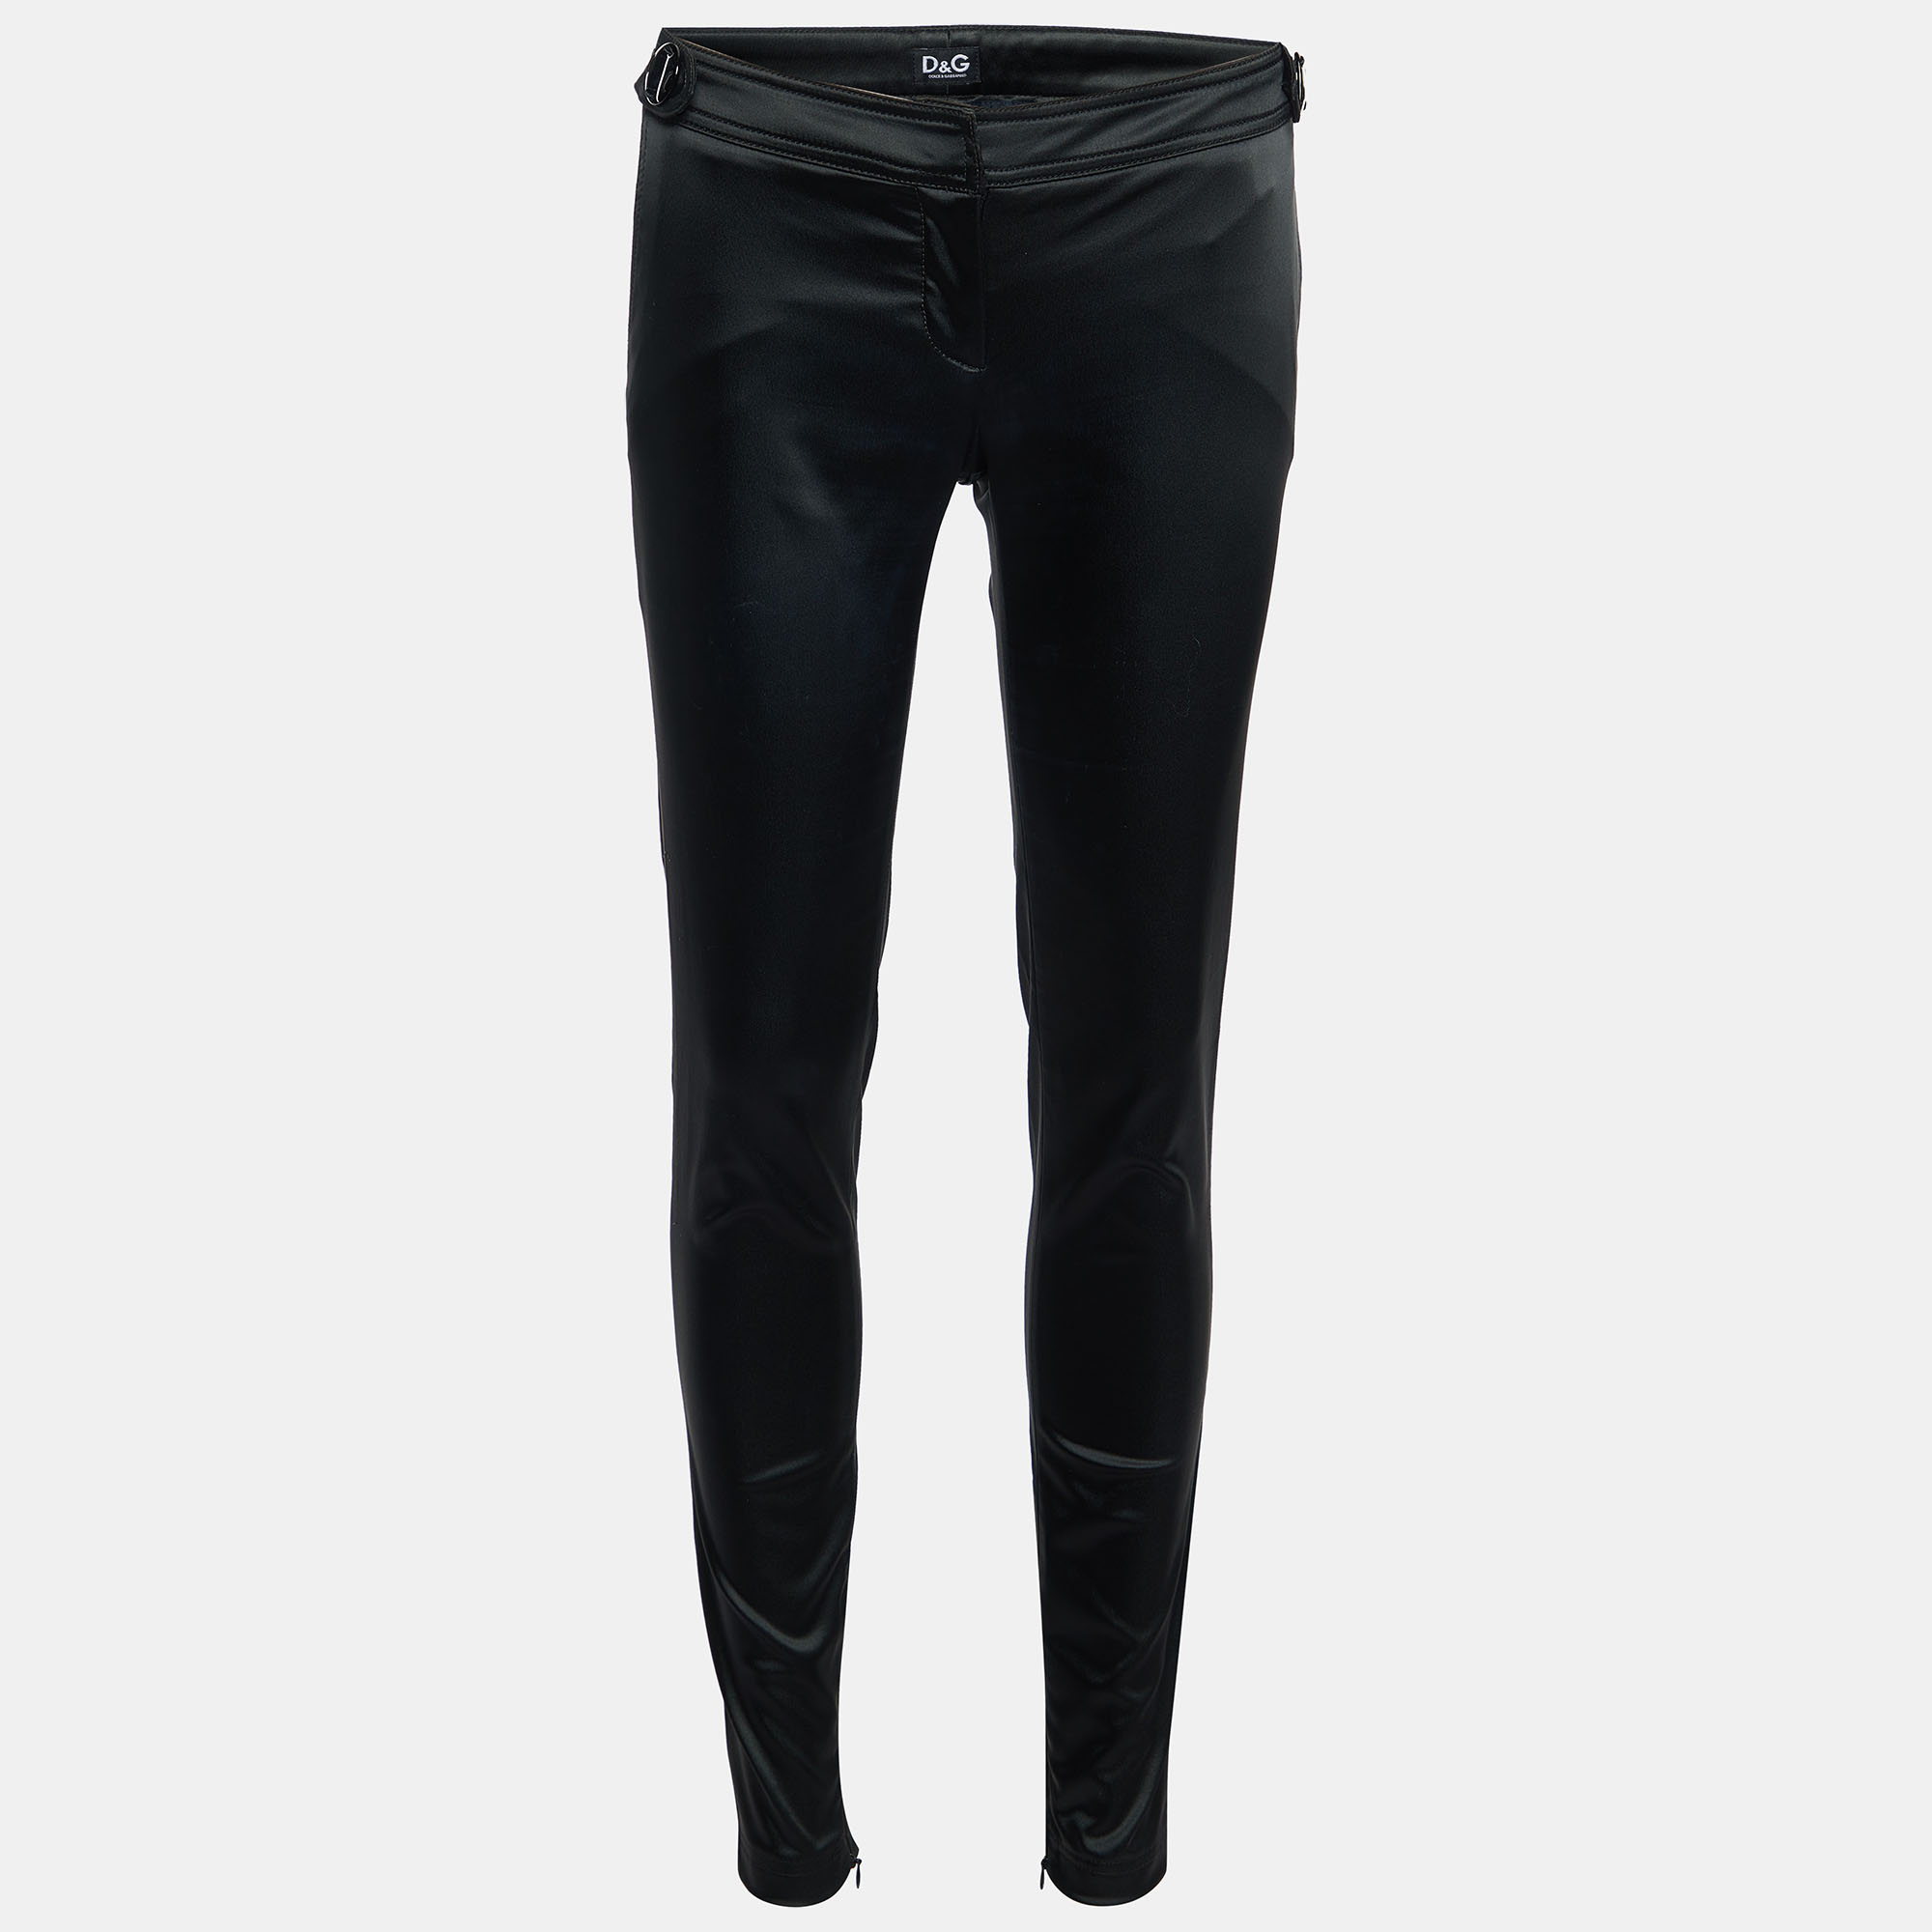 D&g black satin slim fit trousers s